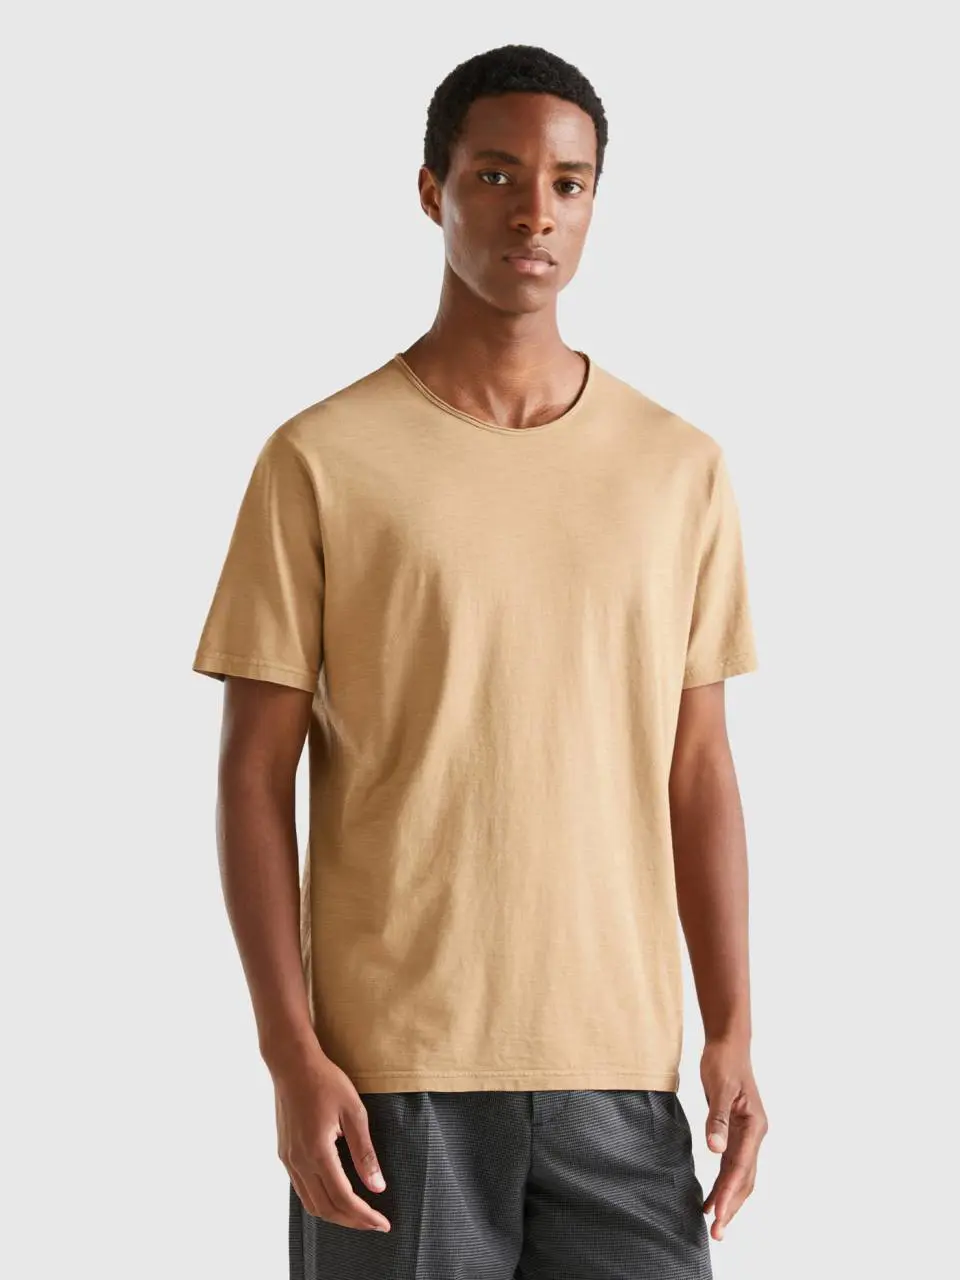 Benetton camel t-shirt in slub cotton. 1